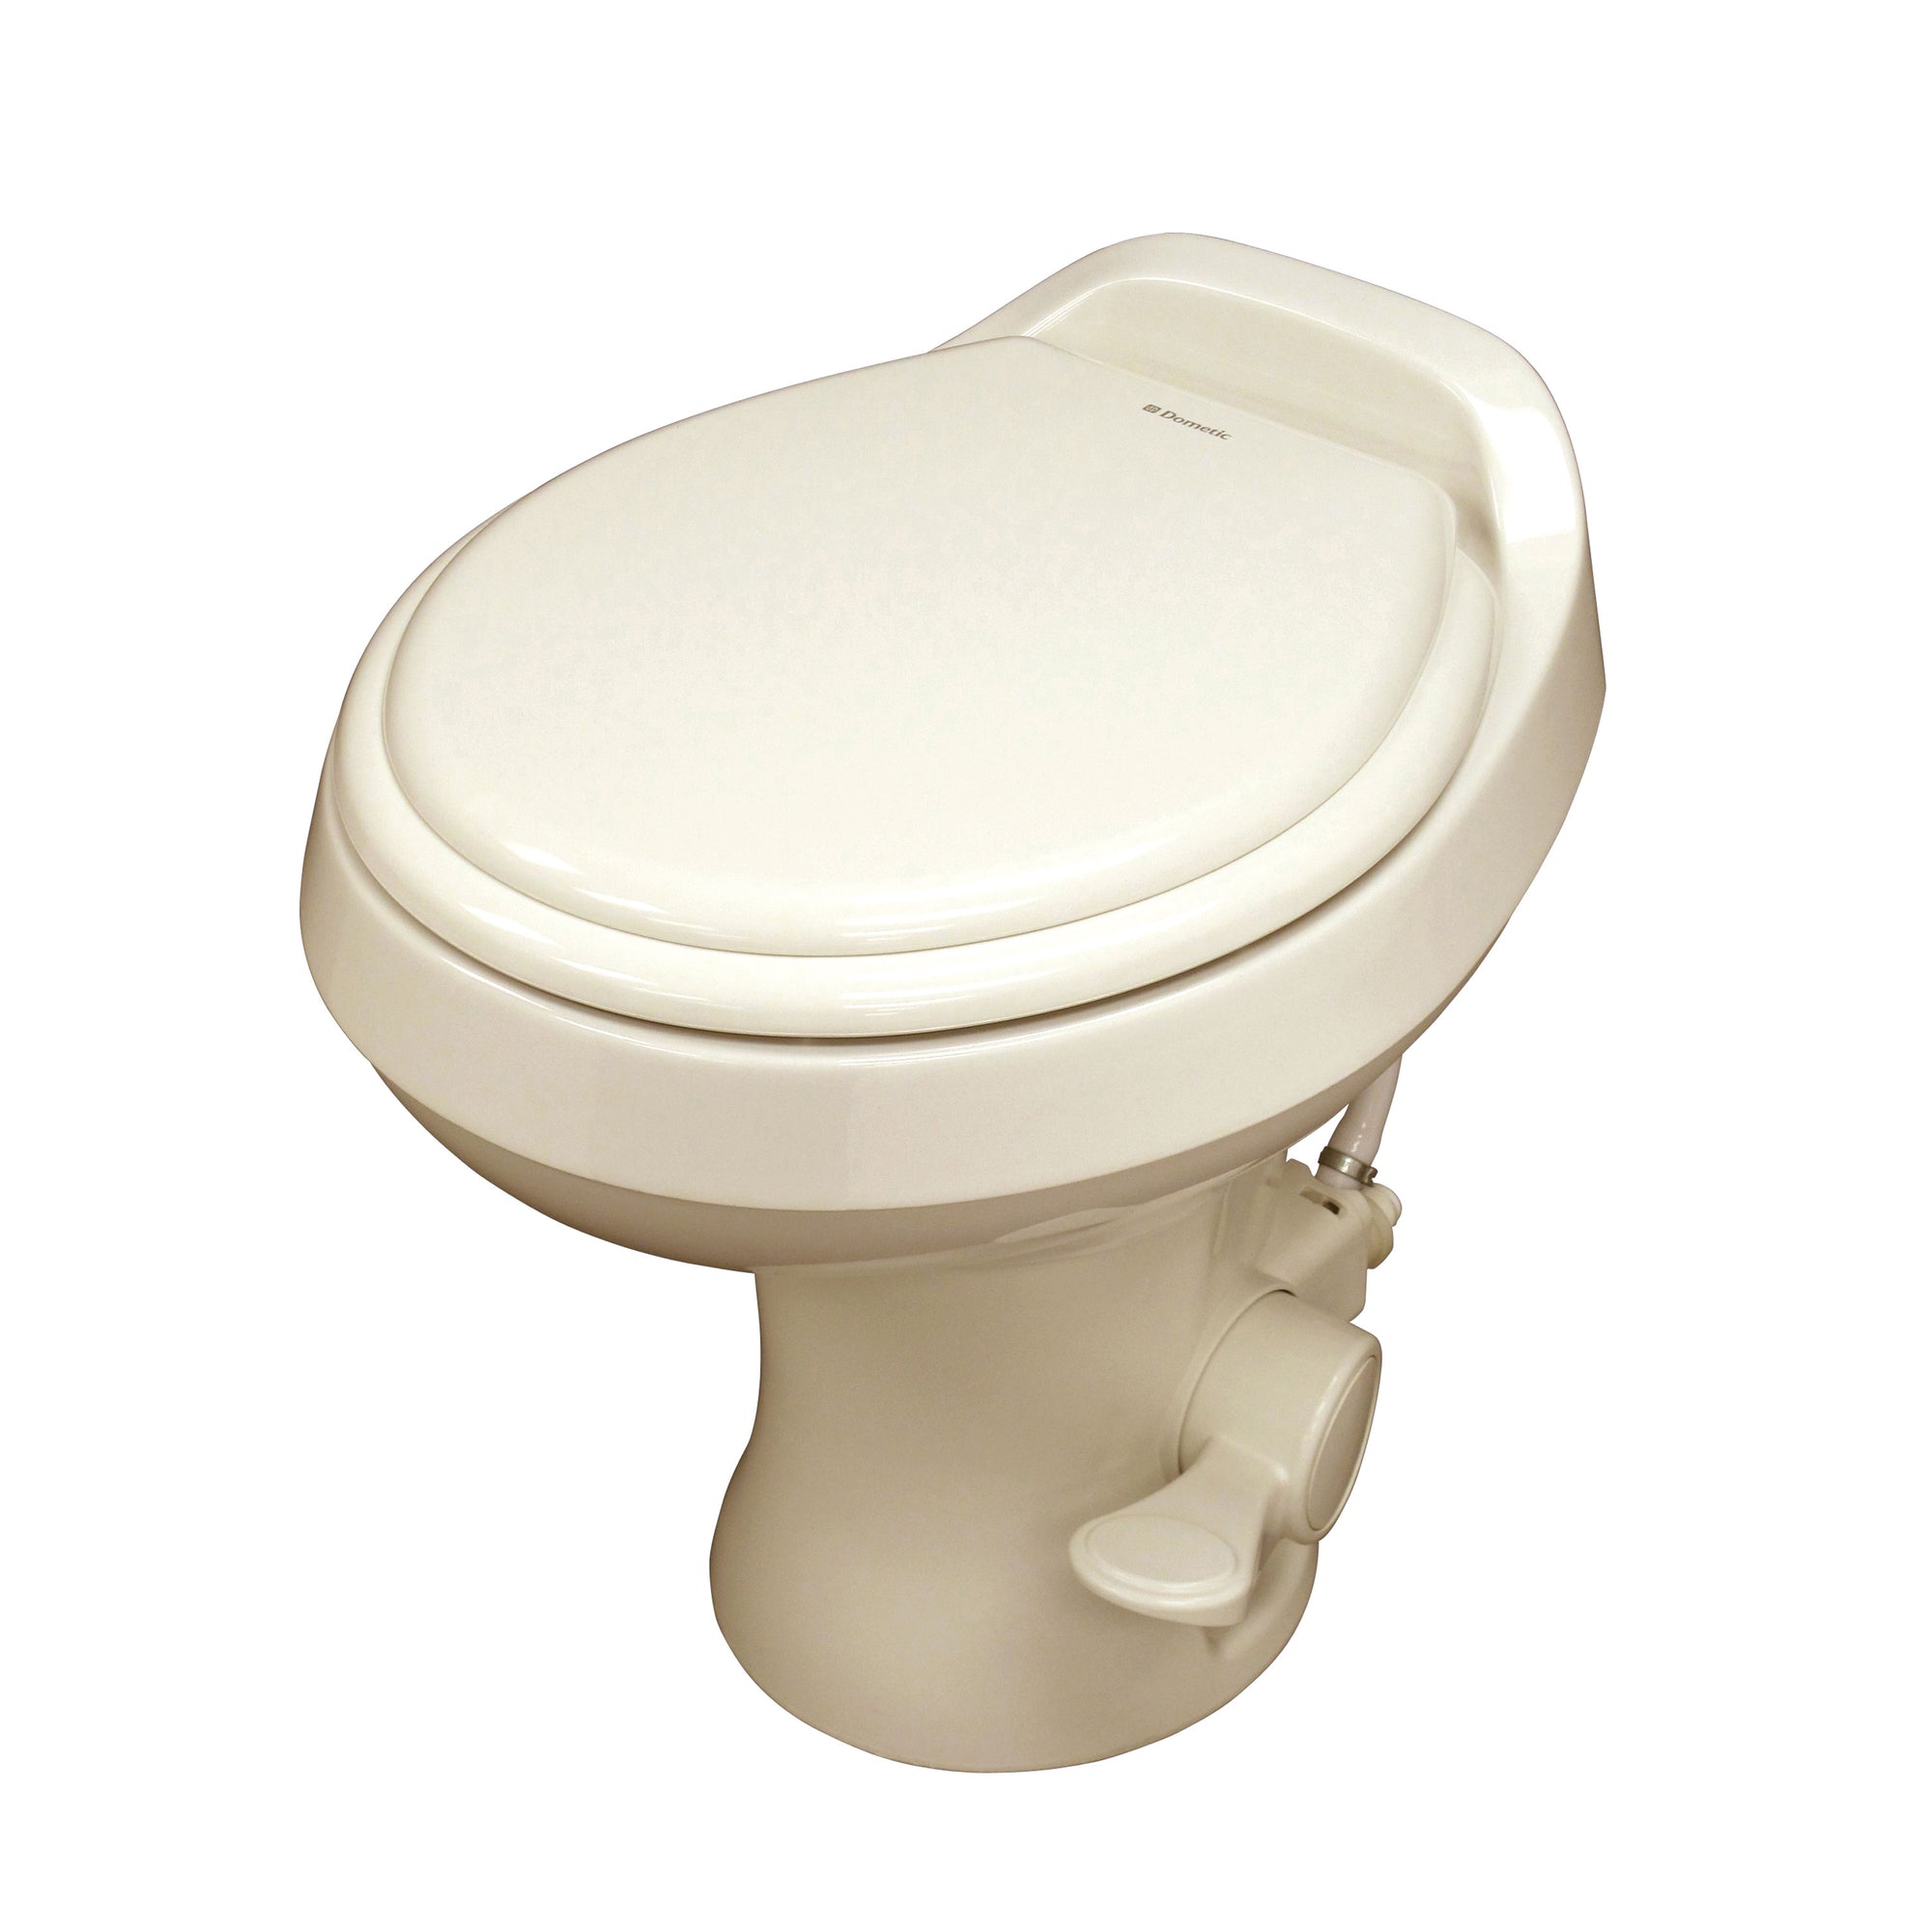 Dometic 302300073 300 Series Standard Height RV Toilet - Bone